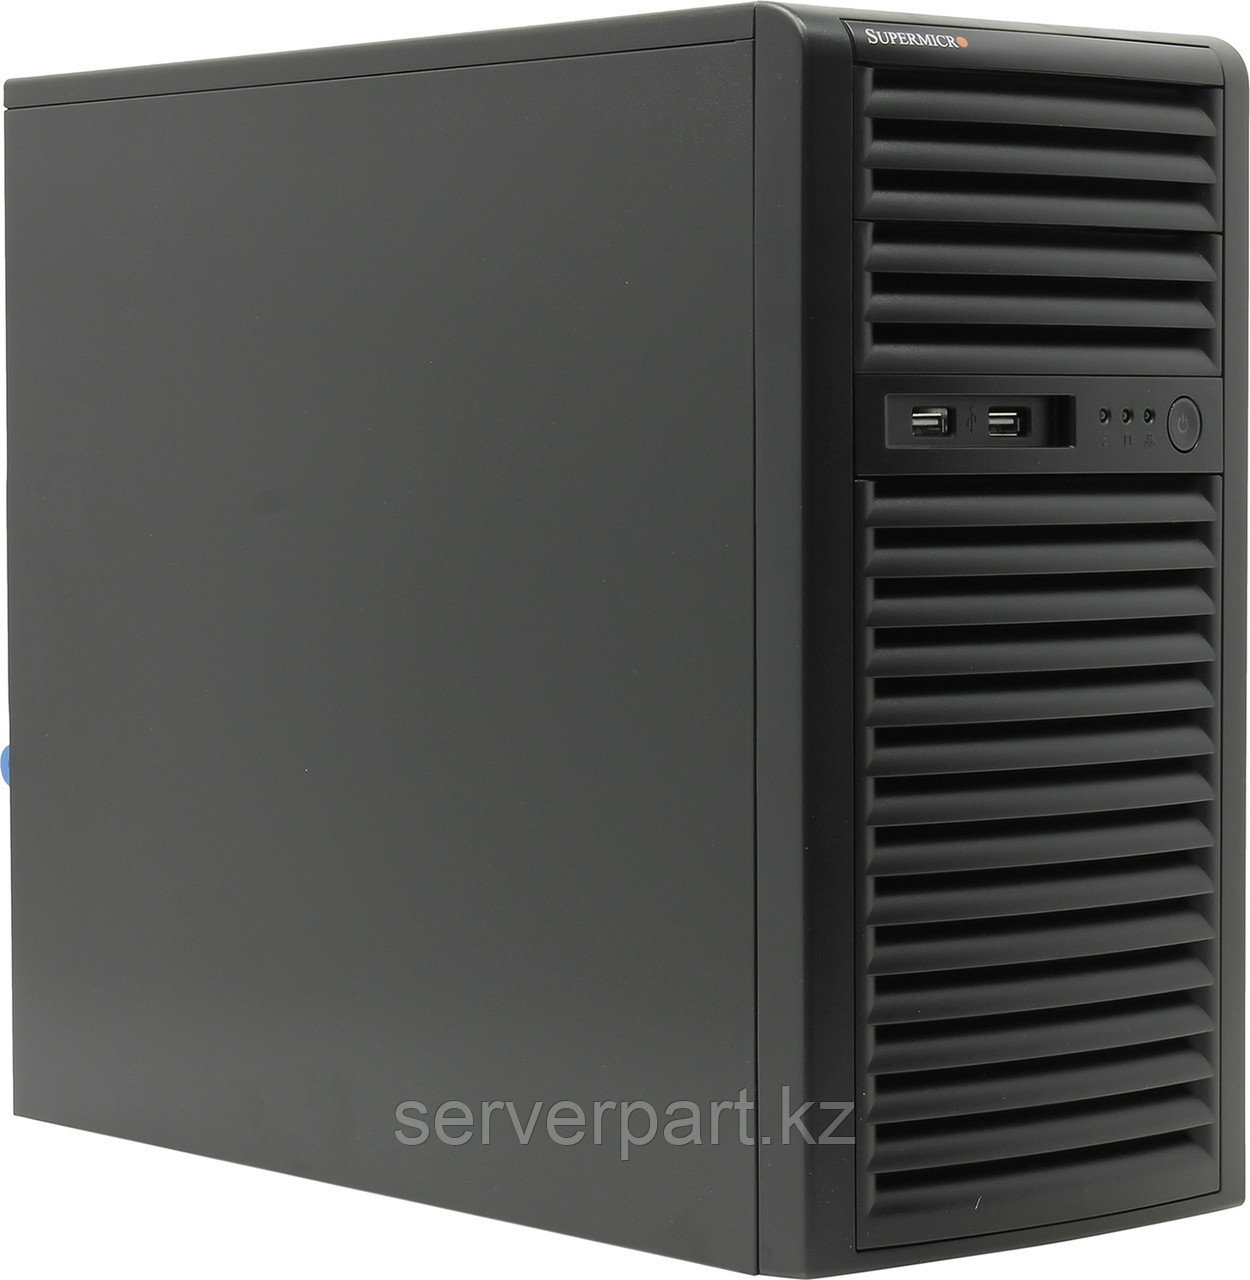 Сервер Supermicro SYS-5039C Tower 4LFF/4-core intel xeon E2124 3.3GHz/16GB UDIMM nECC/1x480GB SSD DT Hyb